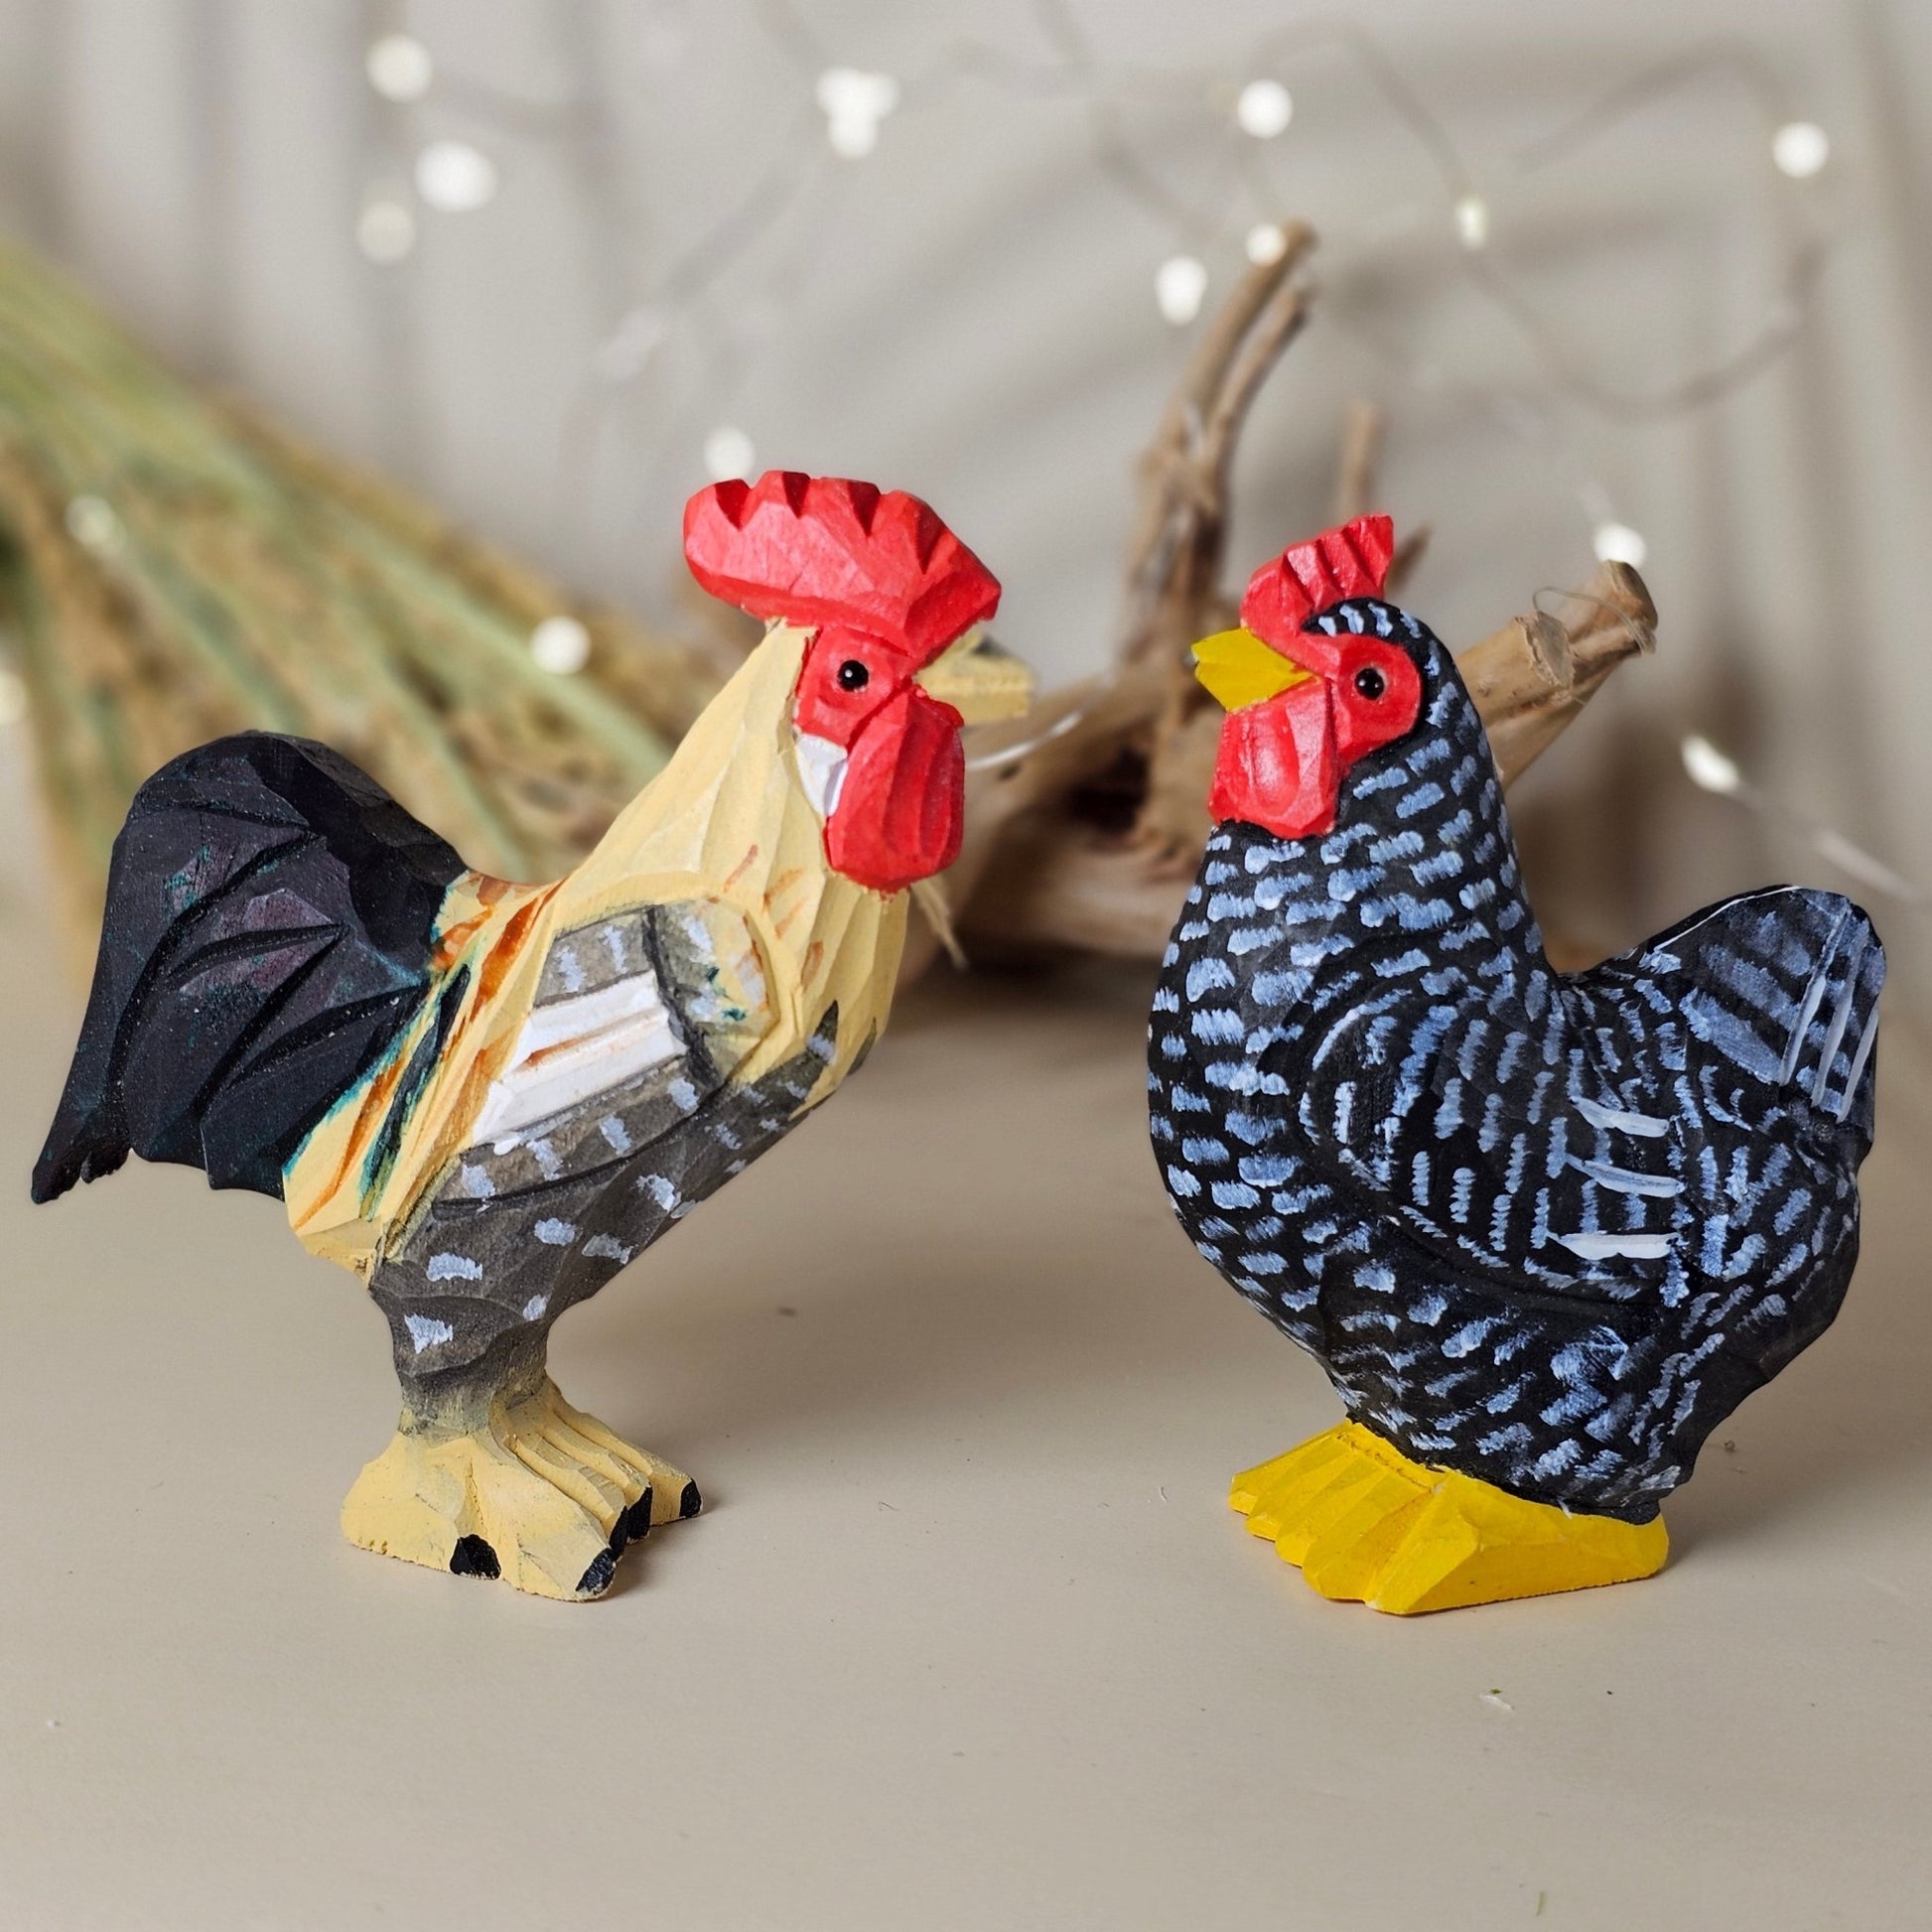 Chicken Hand-Painted Wood Figurine - Wooden Islands